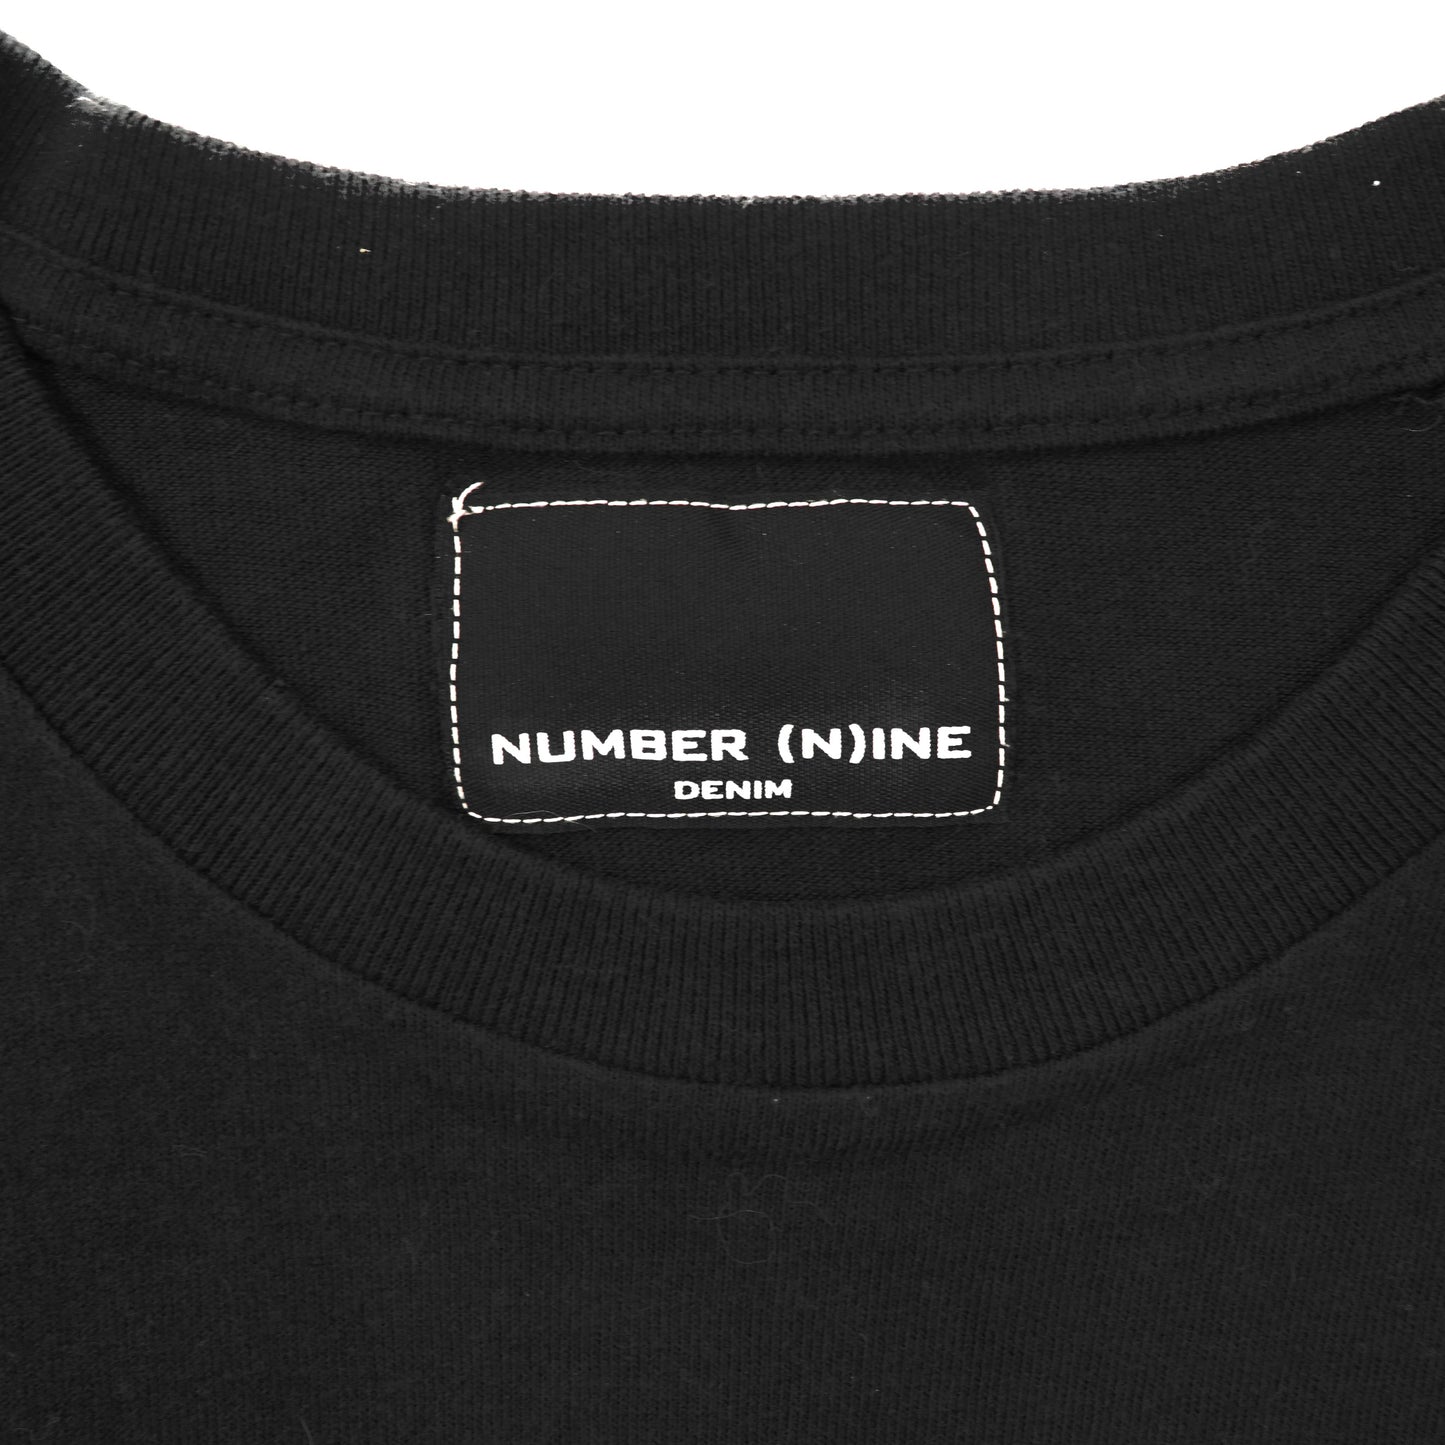 NUMBER (N)INE DENIM ボーダーポケットTシャツ M ブラック コットン